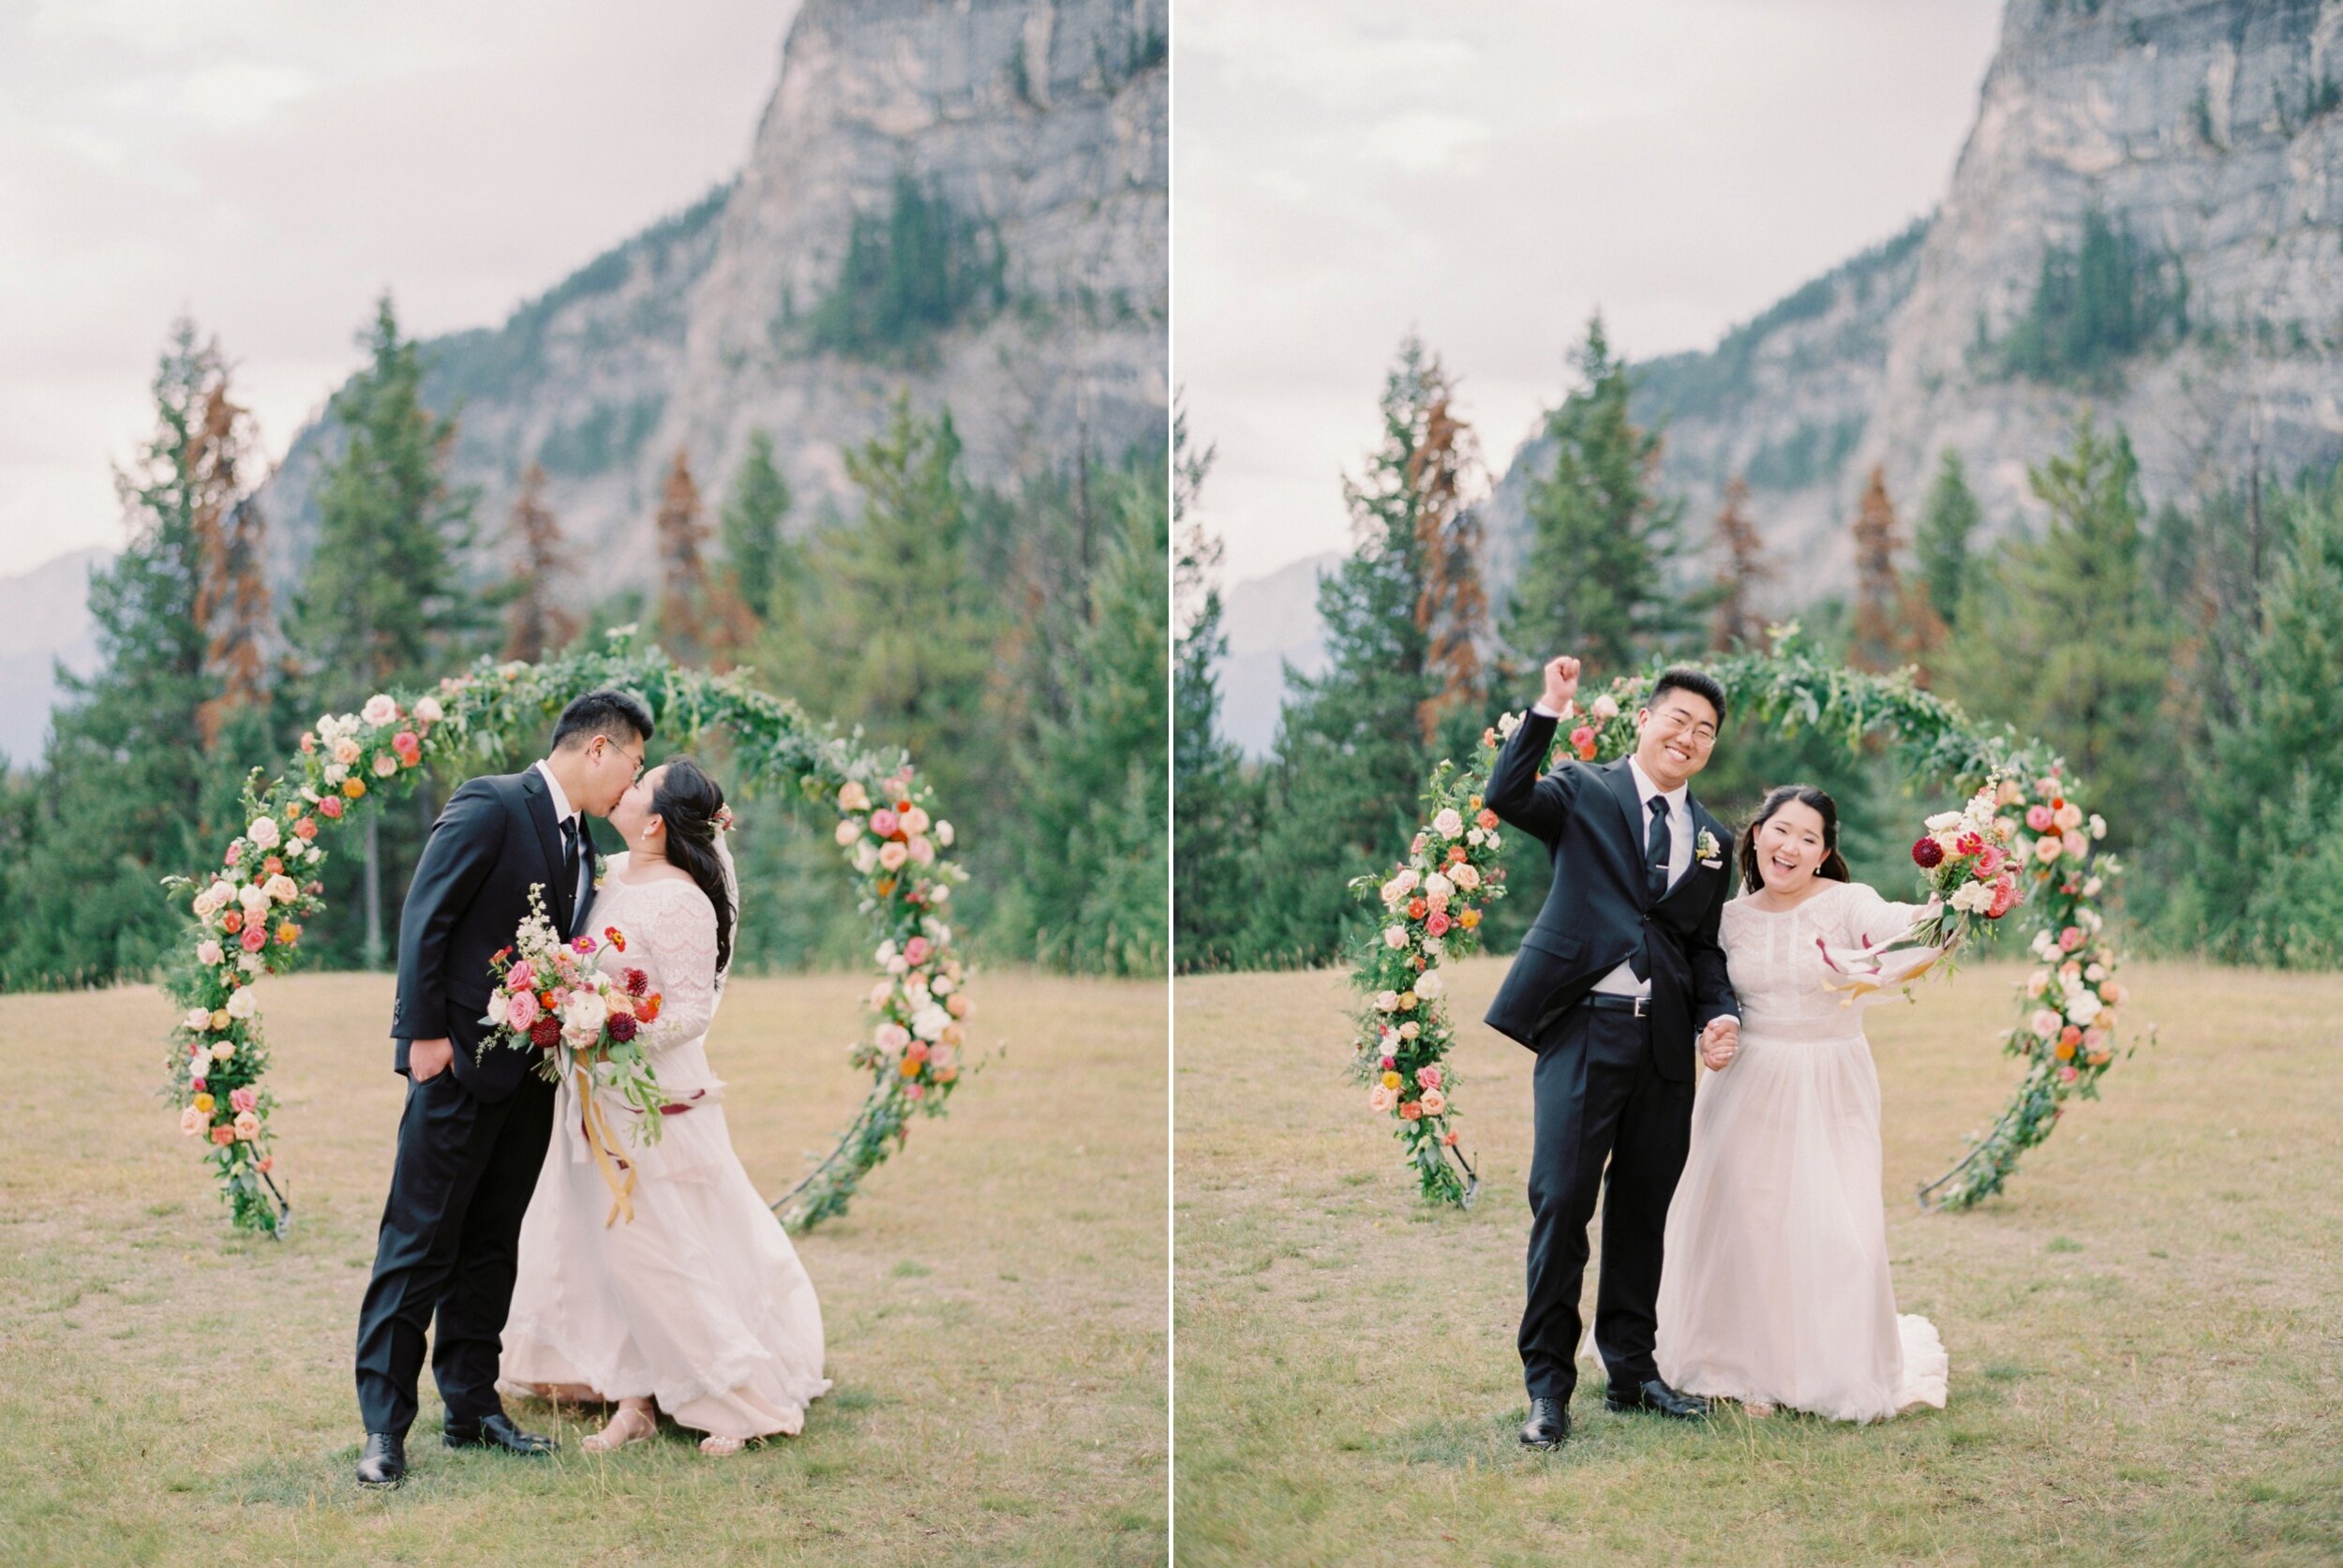  Banff wedding photographers | Justine milton photography | fine art film destination wedding photographer | Banff elopement floral arch ceremony decor 